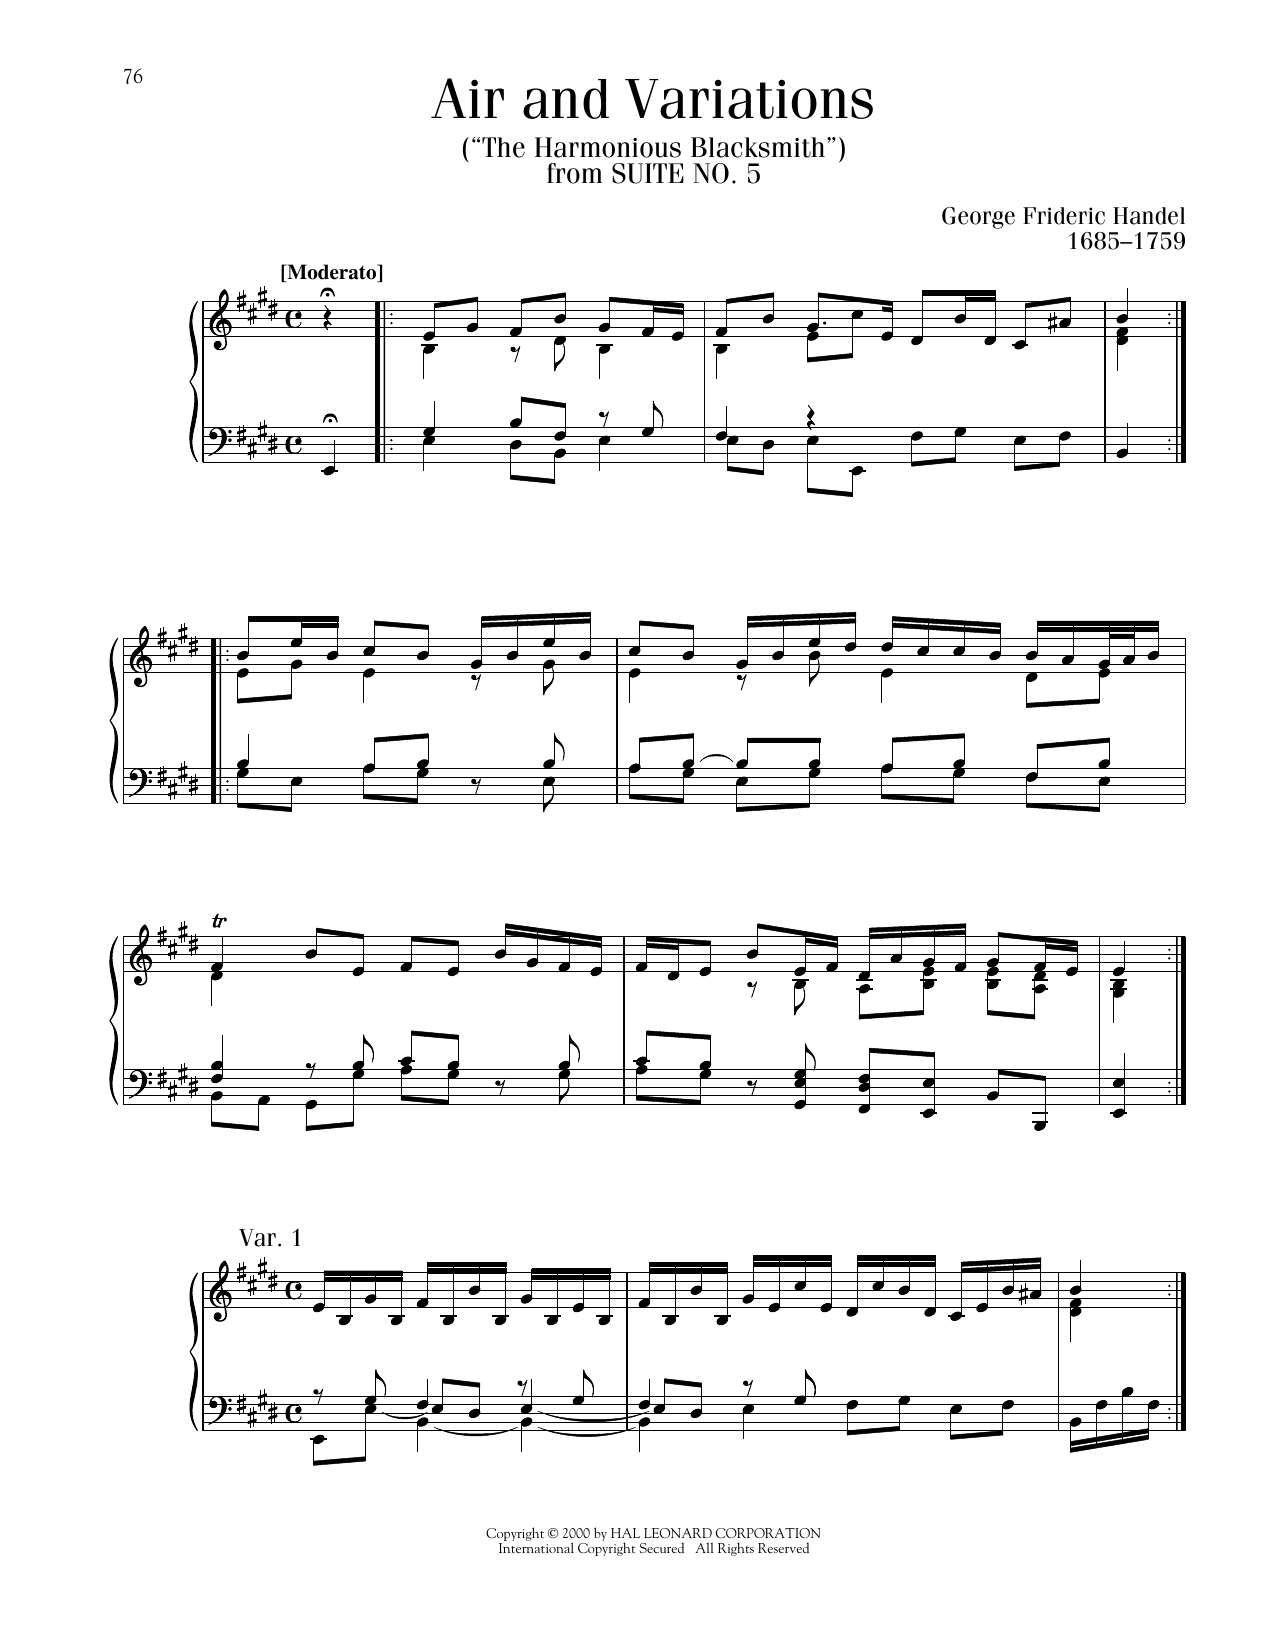 George Frideric Handel The Harmonious Blacksmith sheet music notes printable PDF score